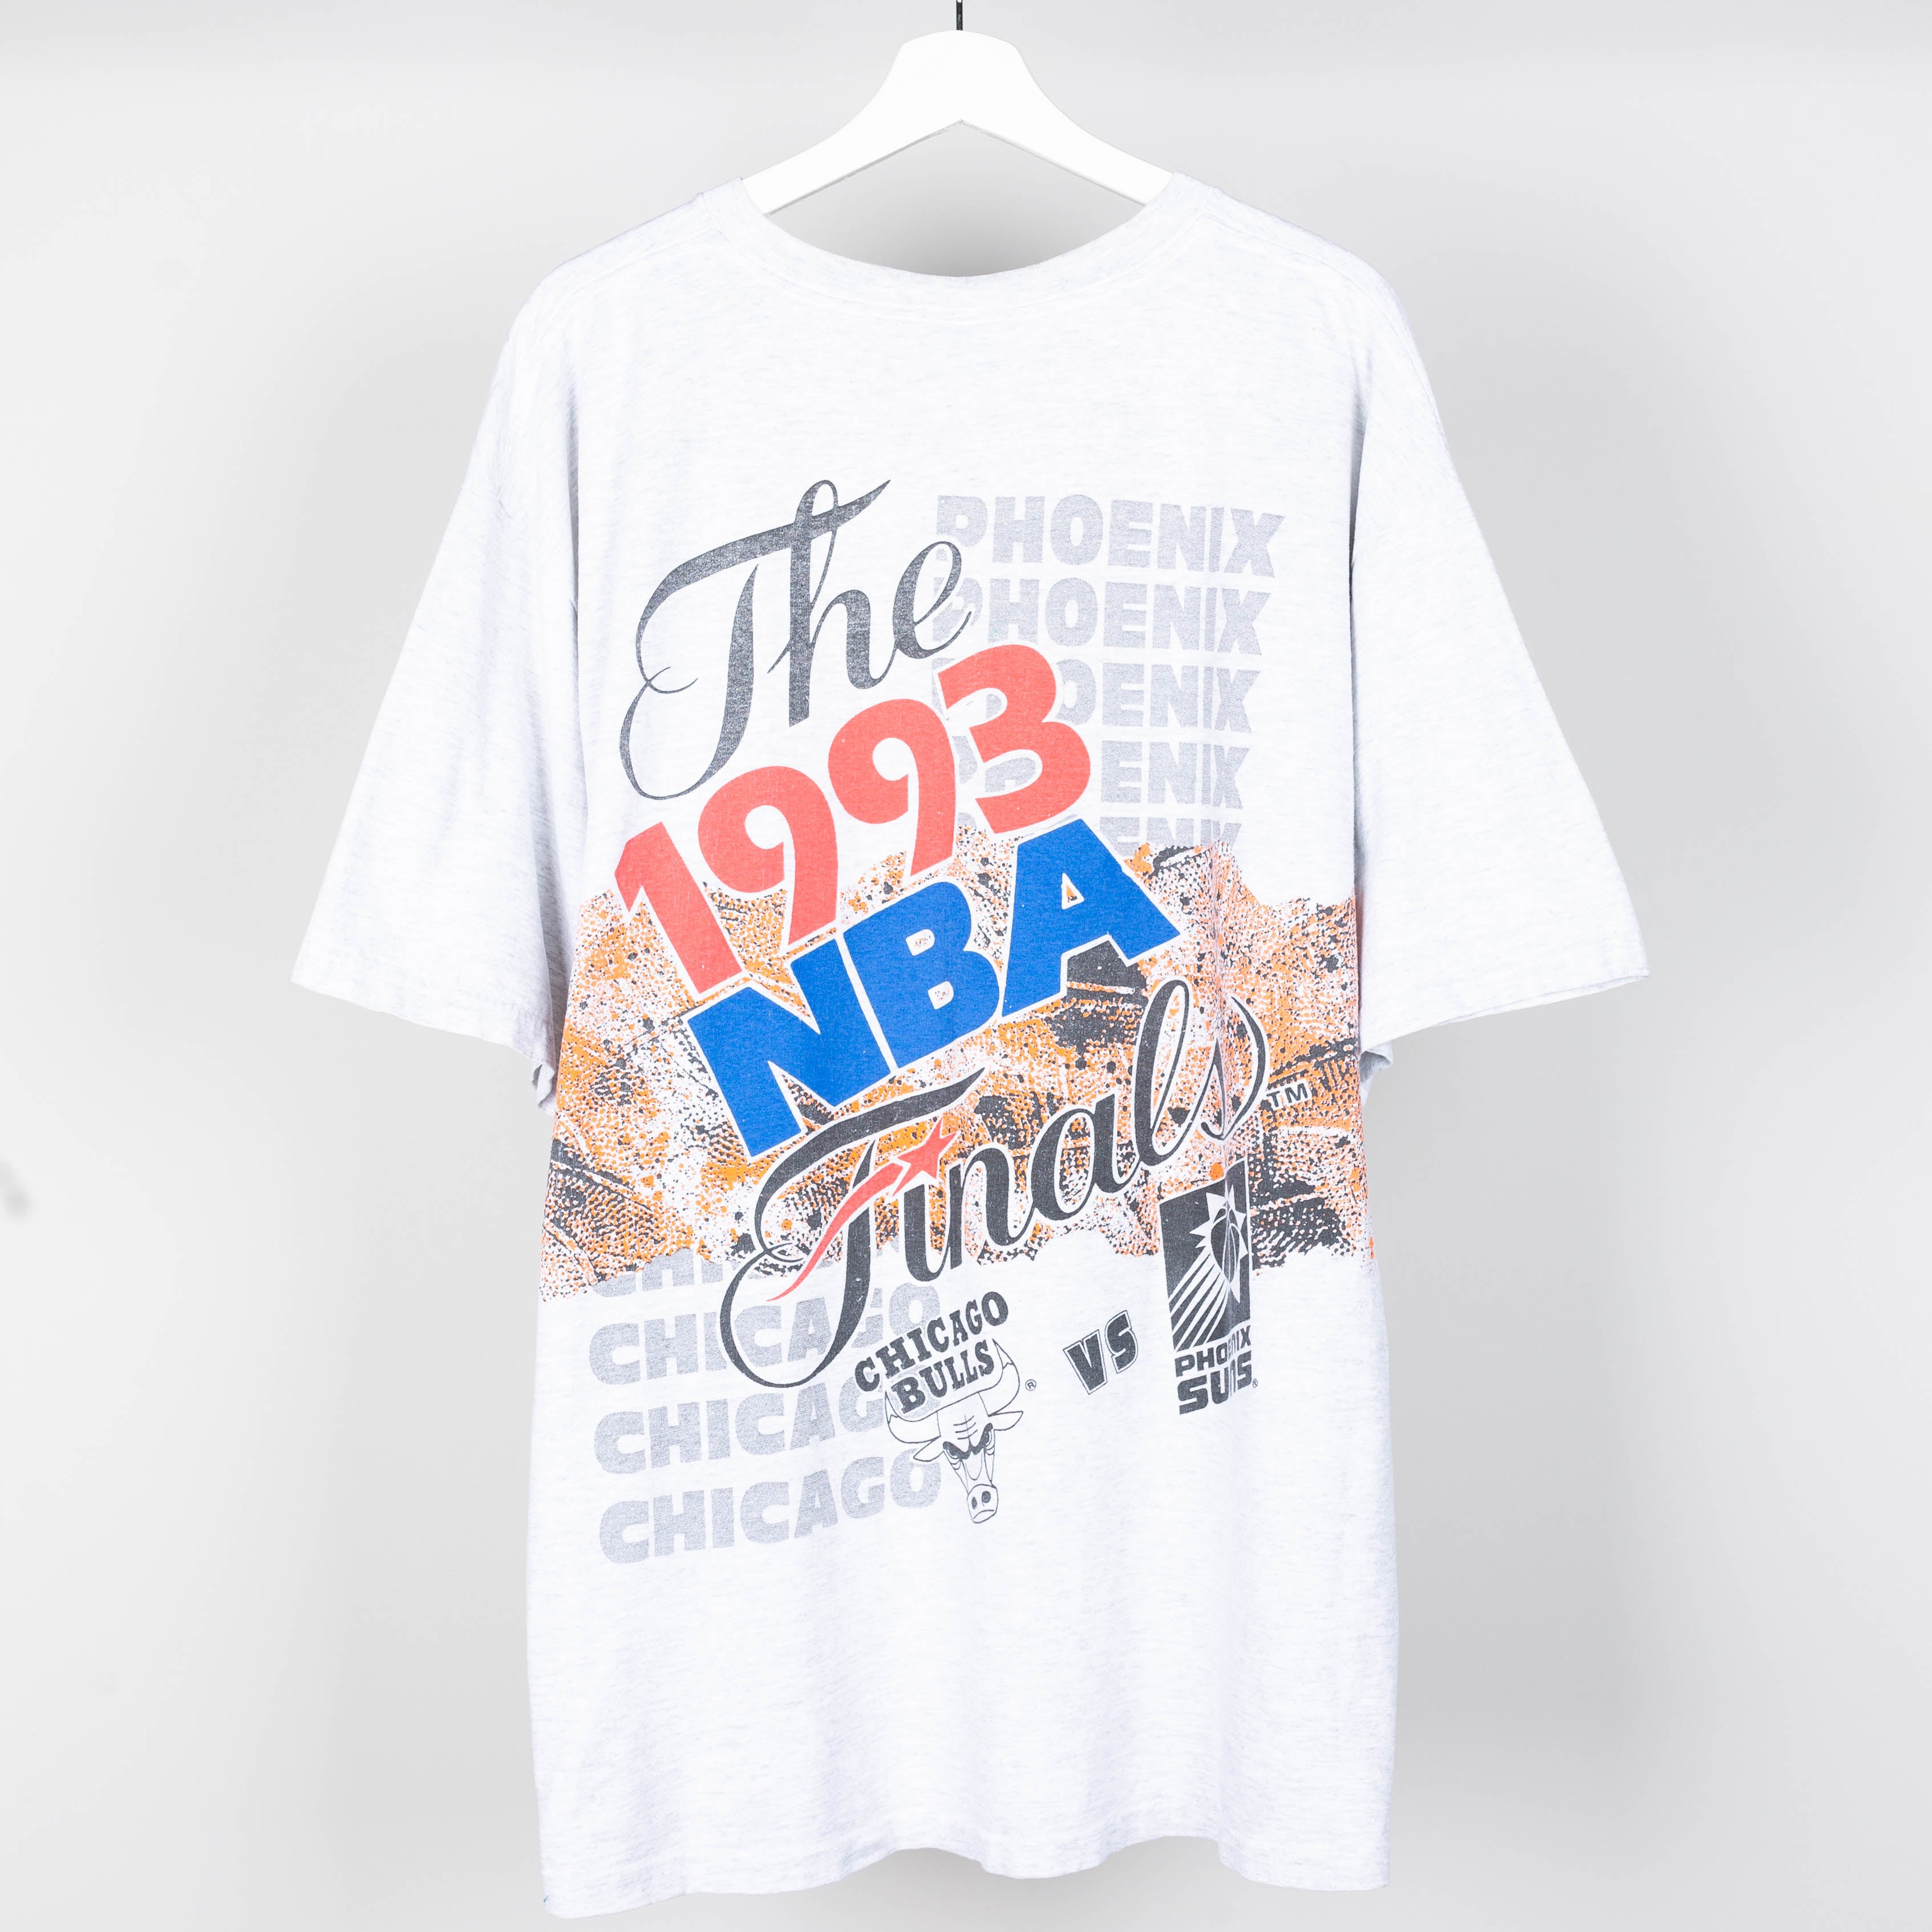 Phoenix Suns vs. Chicago Bulls in the 1993 NBA Finals